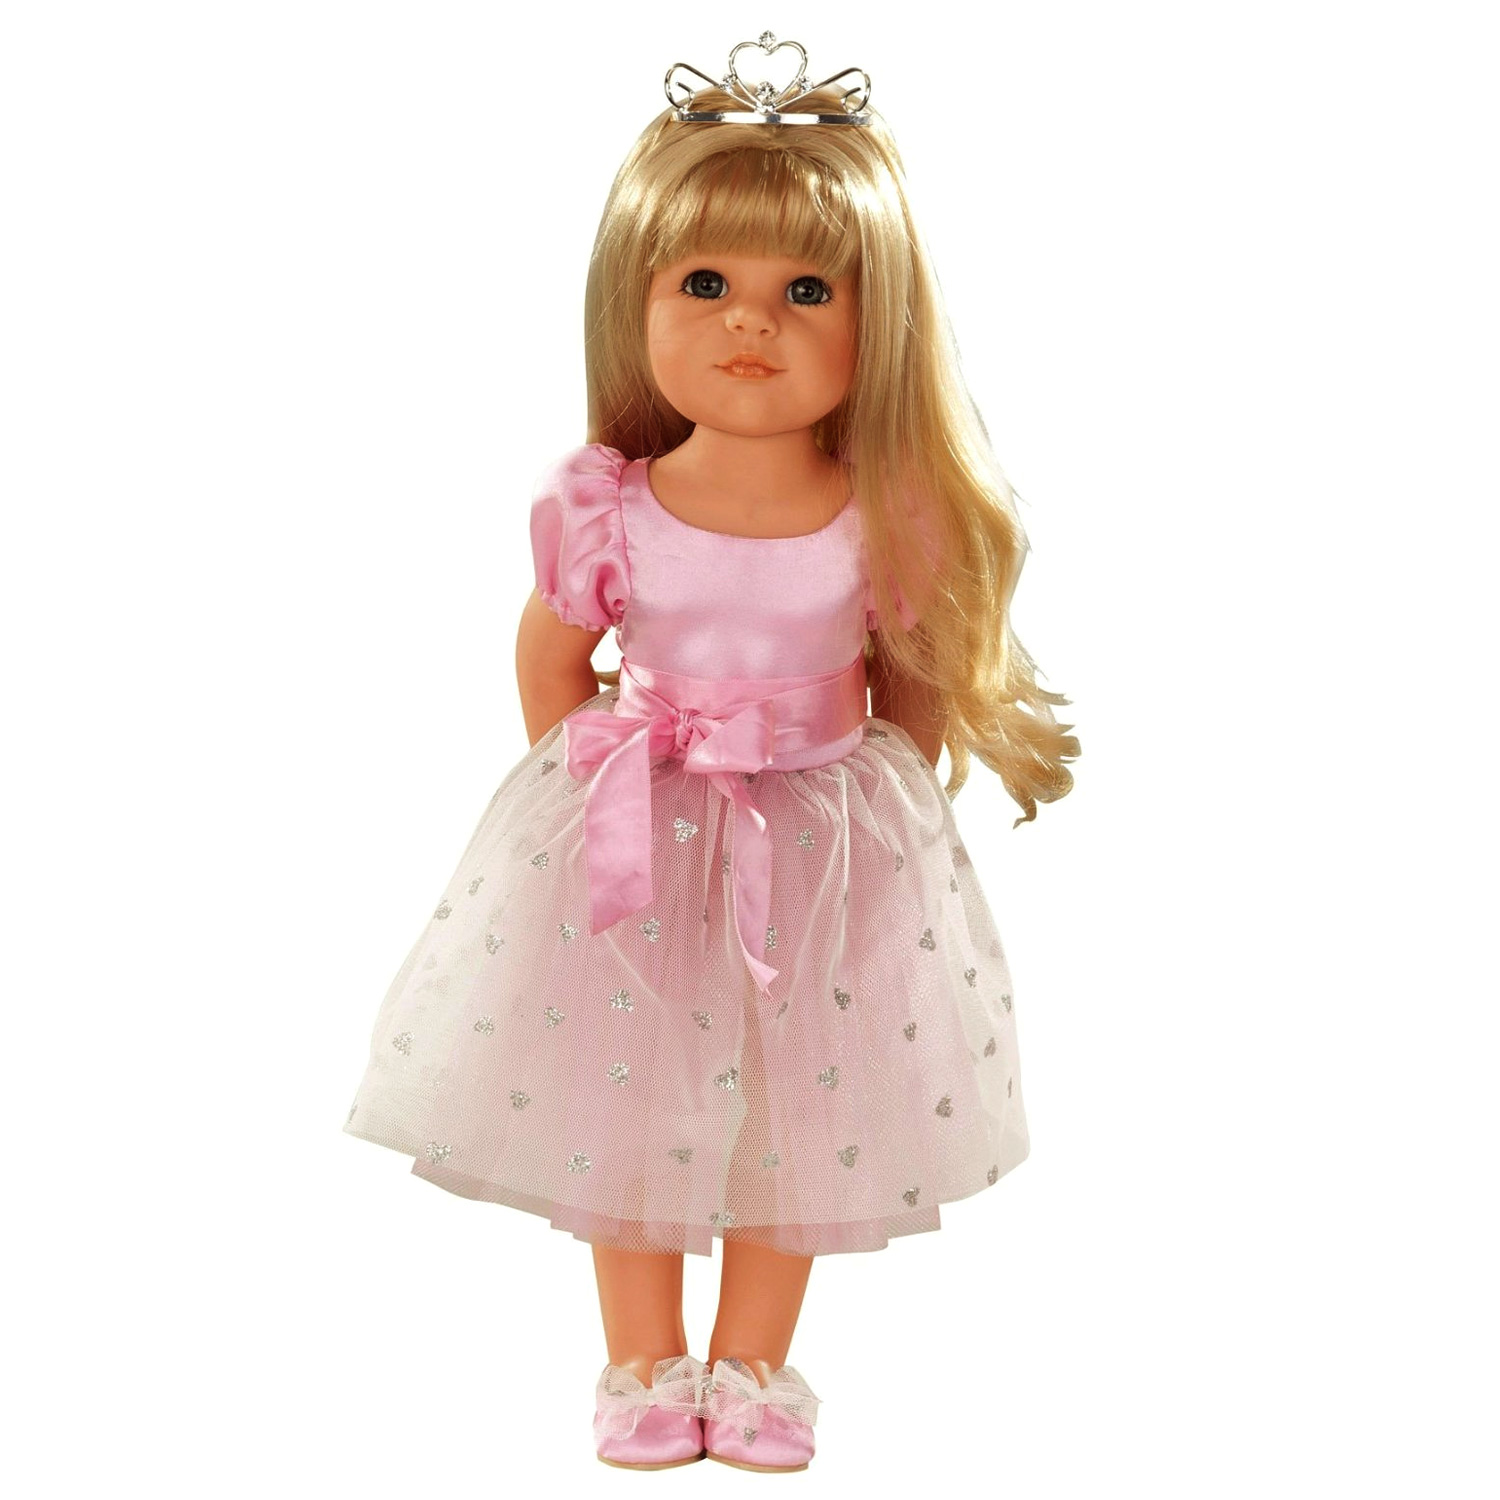 Купить куклу 50 см. Кукла Готц Ханна. Кукла Готц принцесса Gotz Ханна. Кукла Gotz Ханна 50 см. Gotz кукла Ханна принцесса.